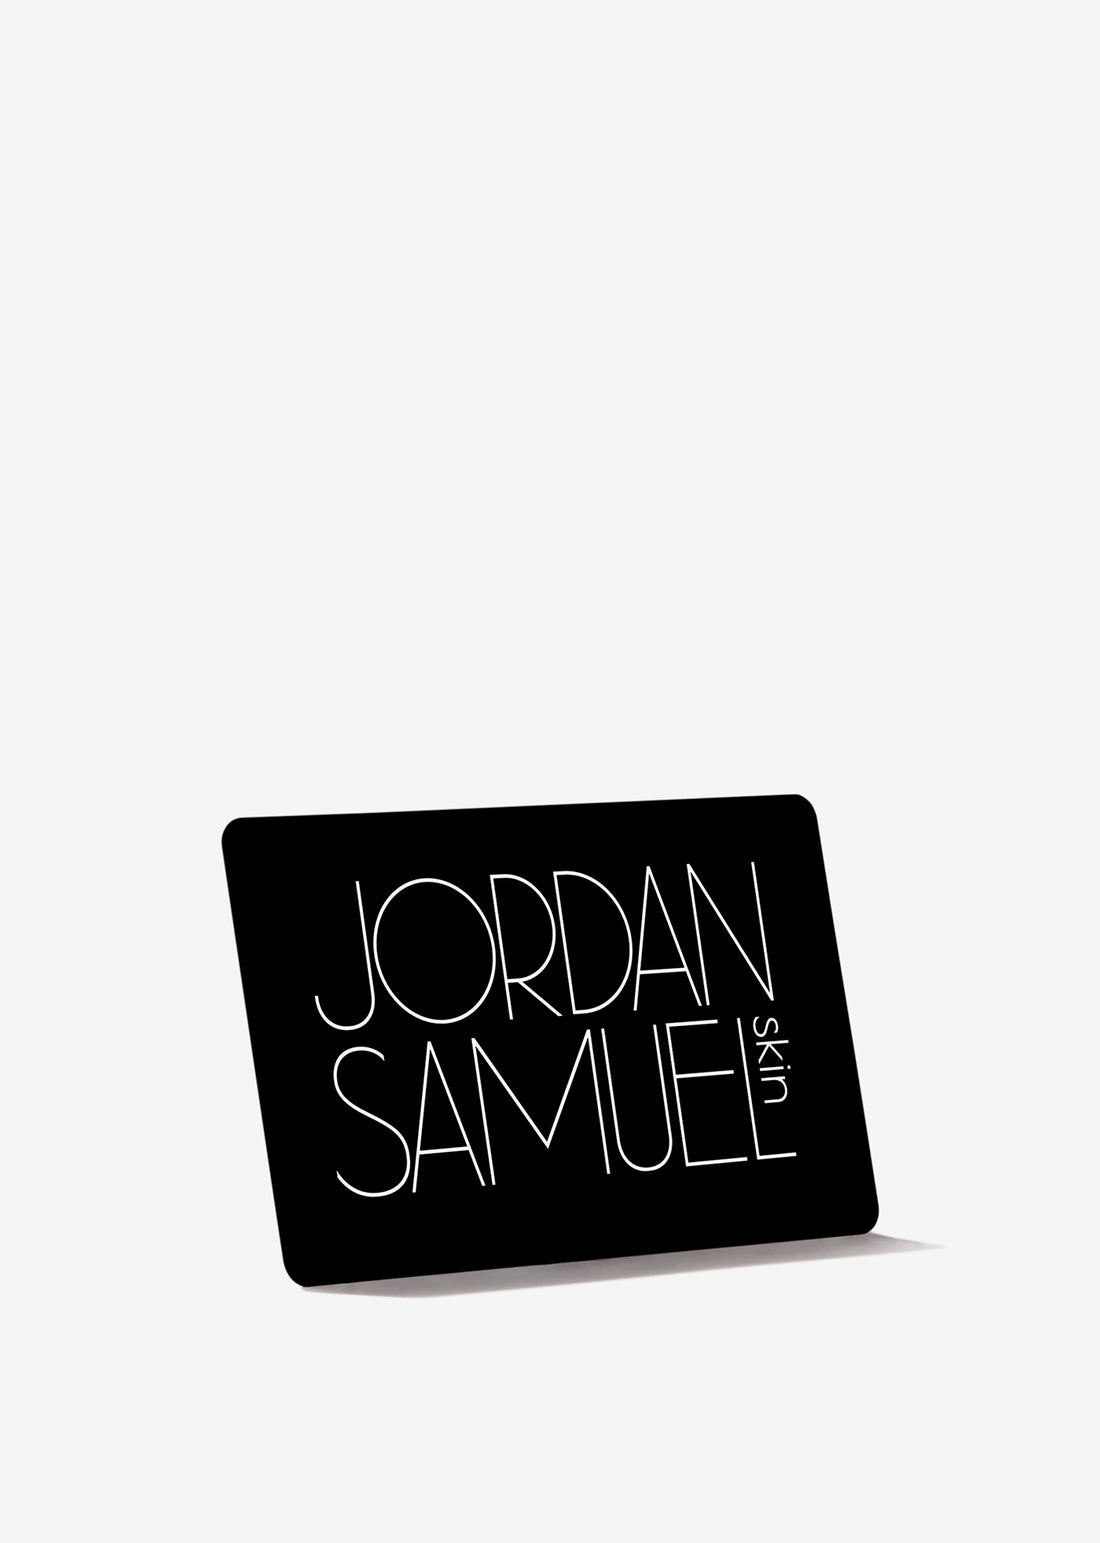 Black-with-white-type Jordan Samuel Skin gift card.